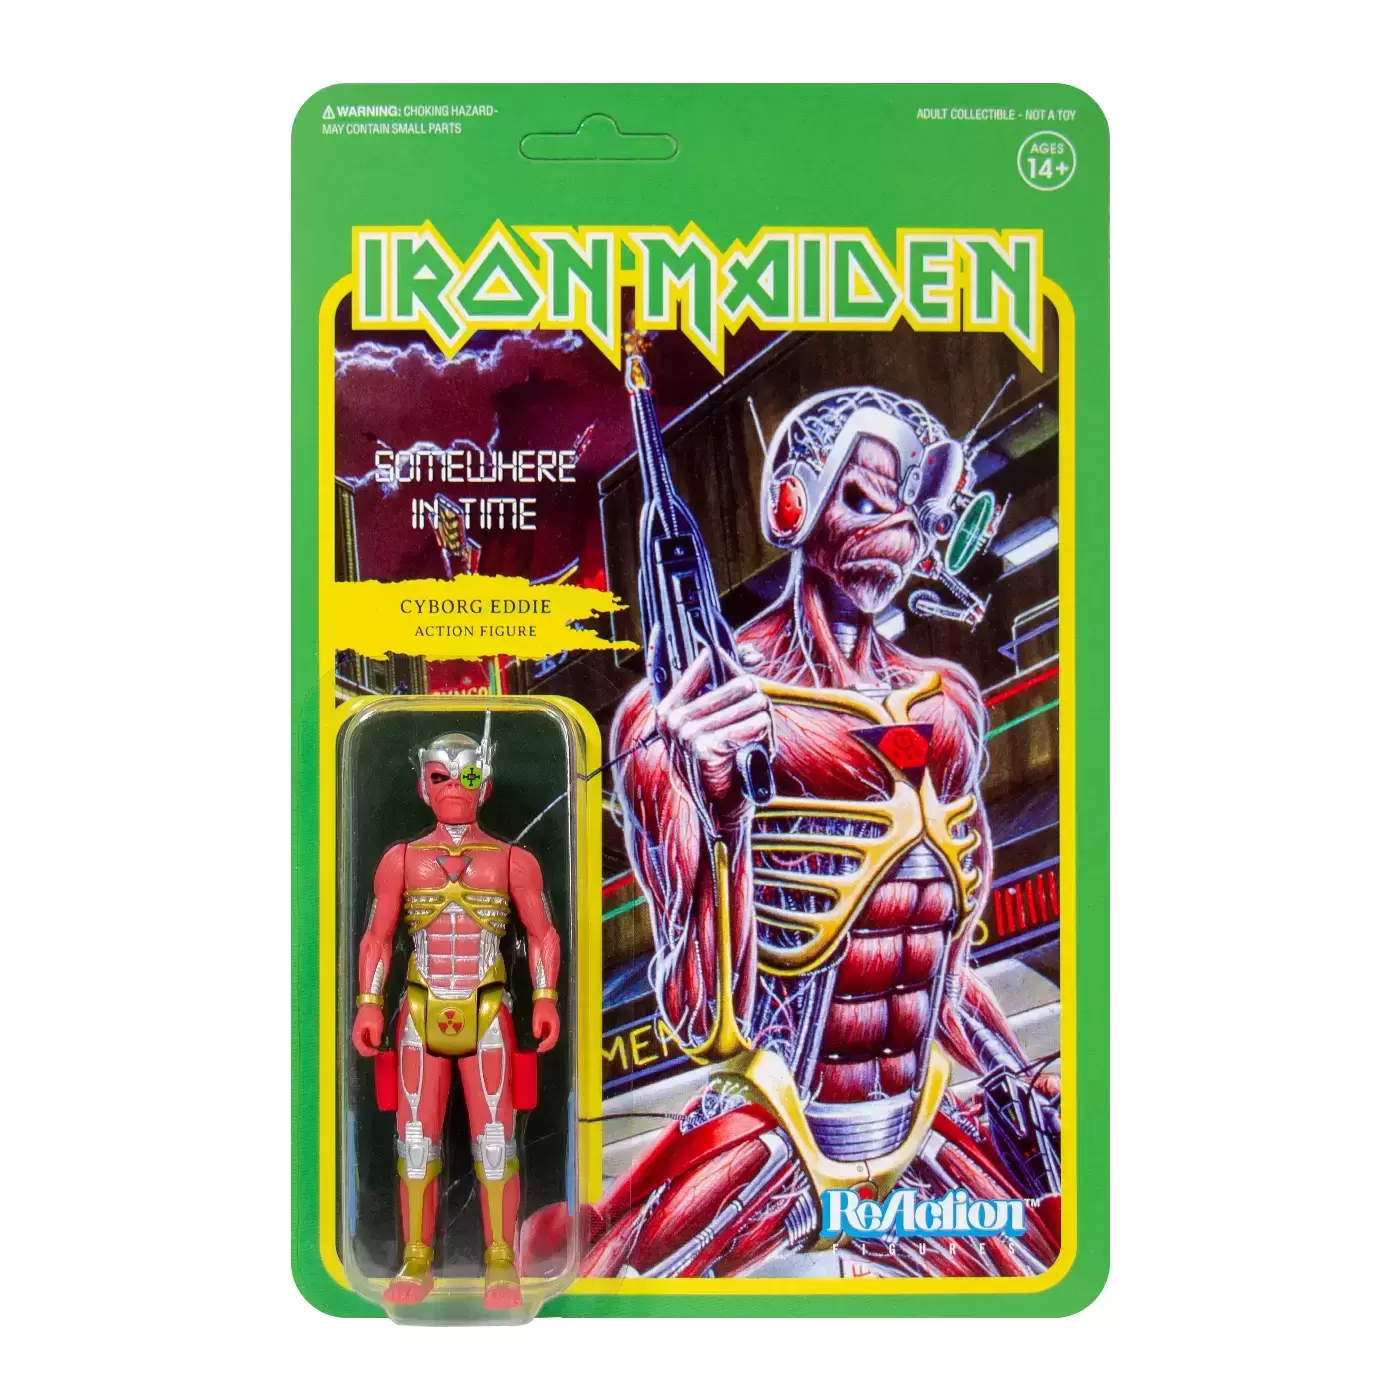 ReAction Figures - Iron Maiden - Cyborg Eddie (Somewhere In Time)